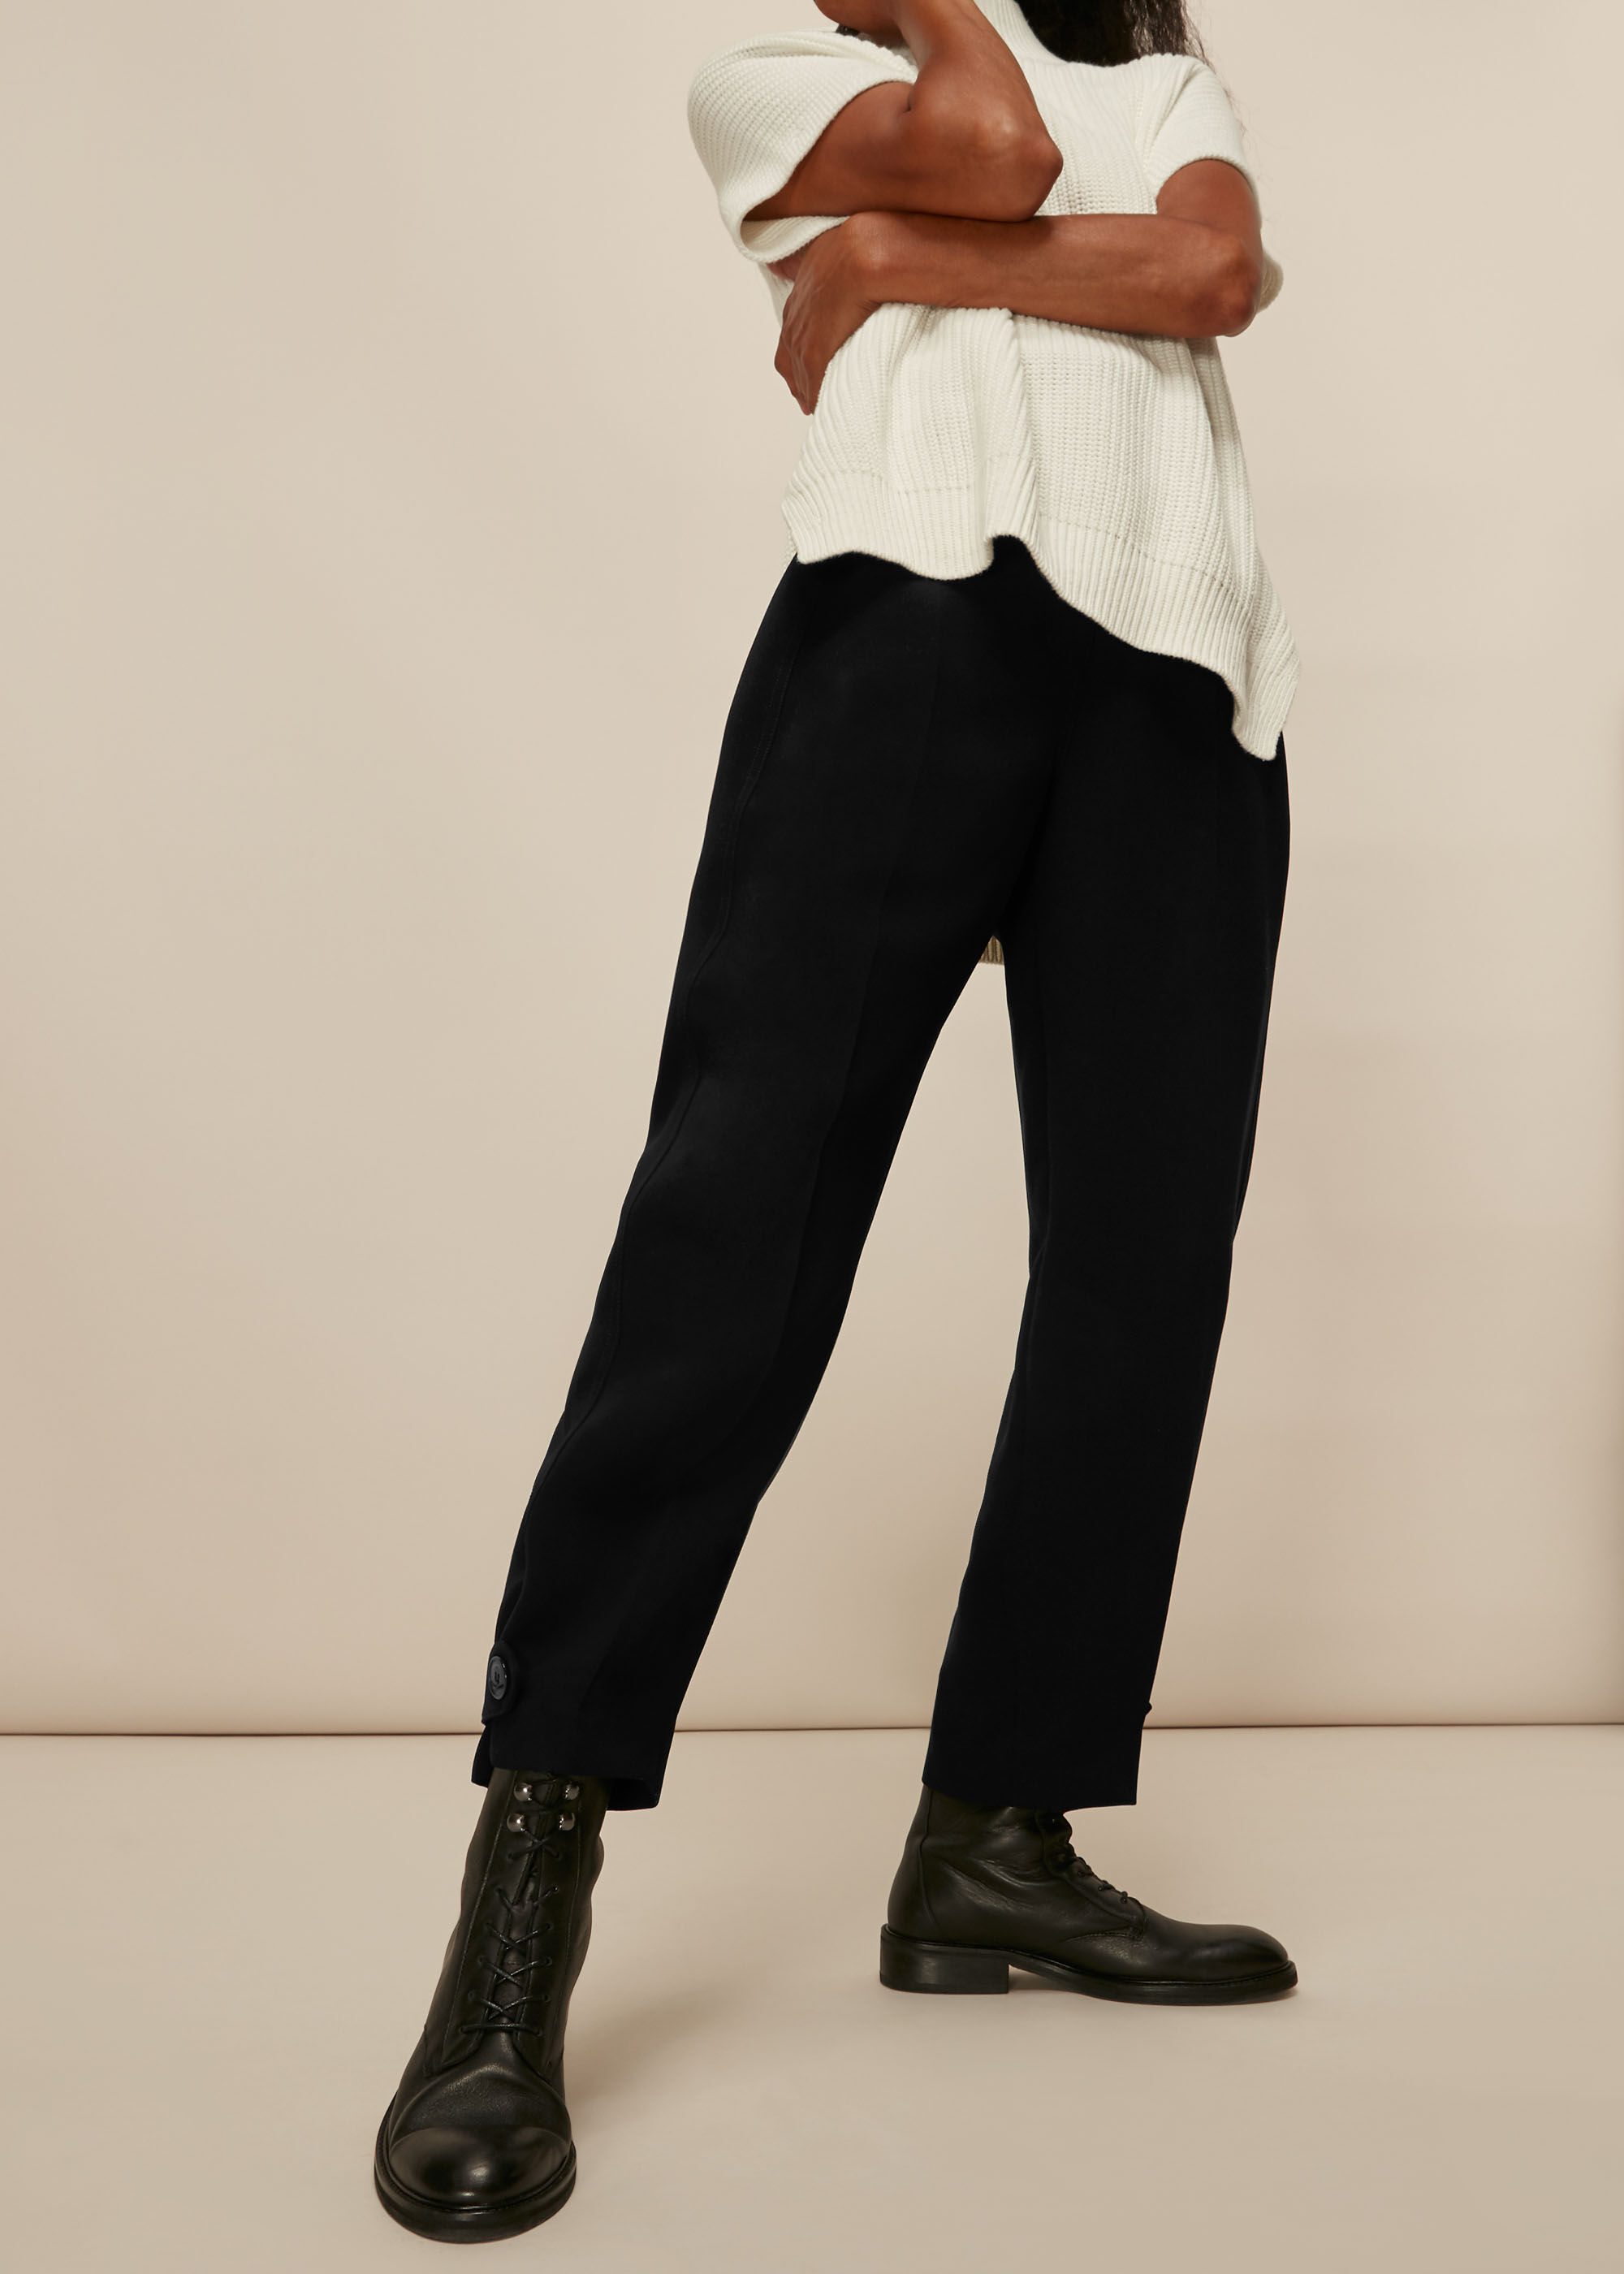 Buy Zastraa Women White Black Regular Fit Striped Peg Trousers at Amazonin